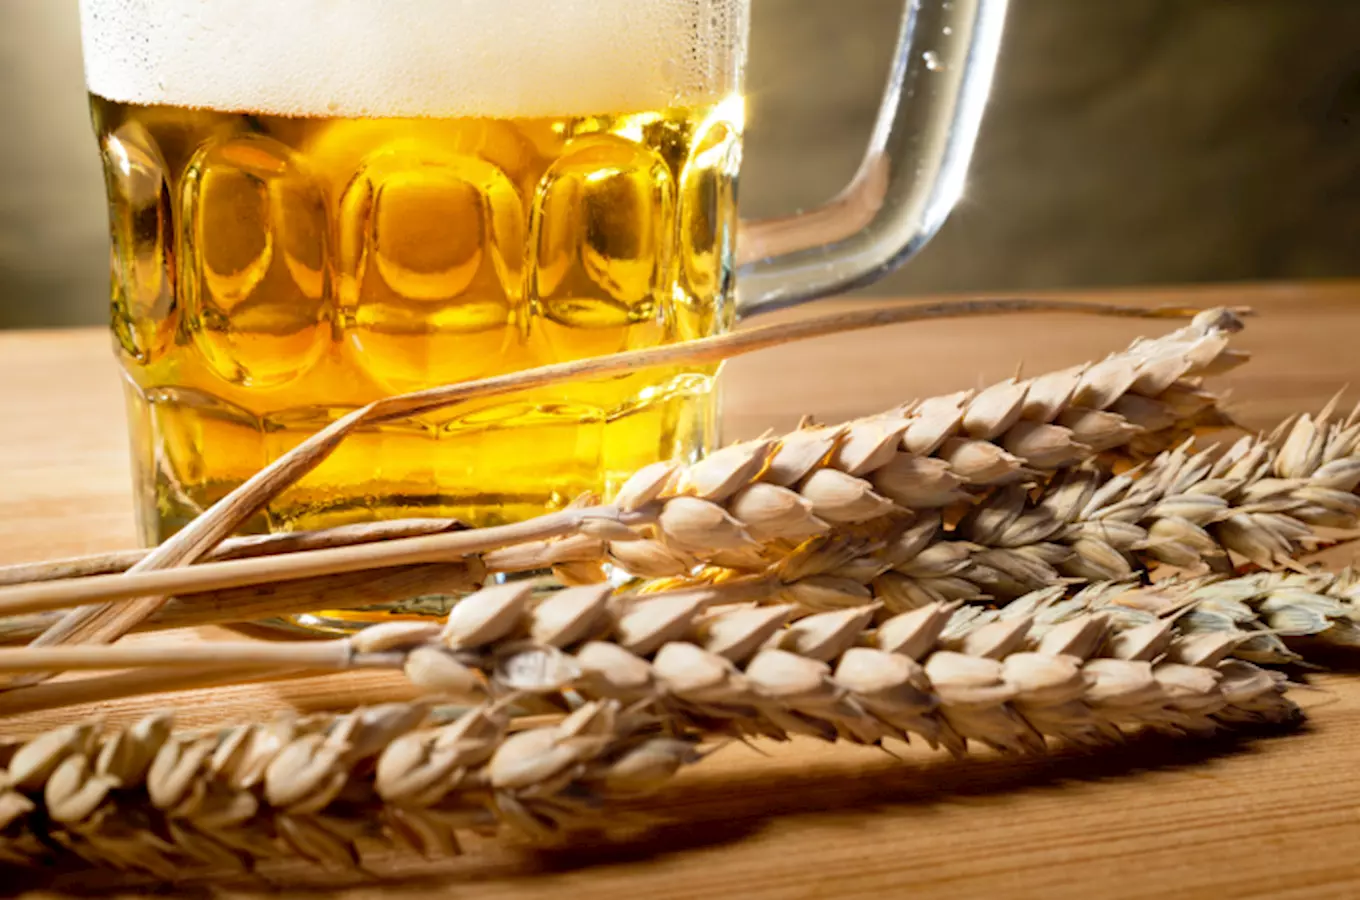 Slavnosti piva v Královském pivovaru Krušovice 2020 - zrušeno